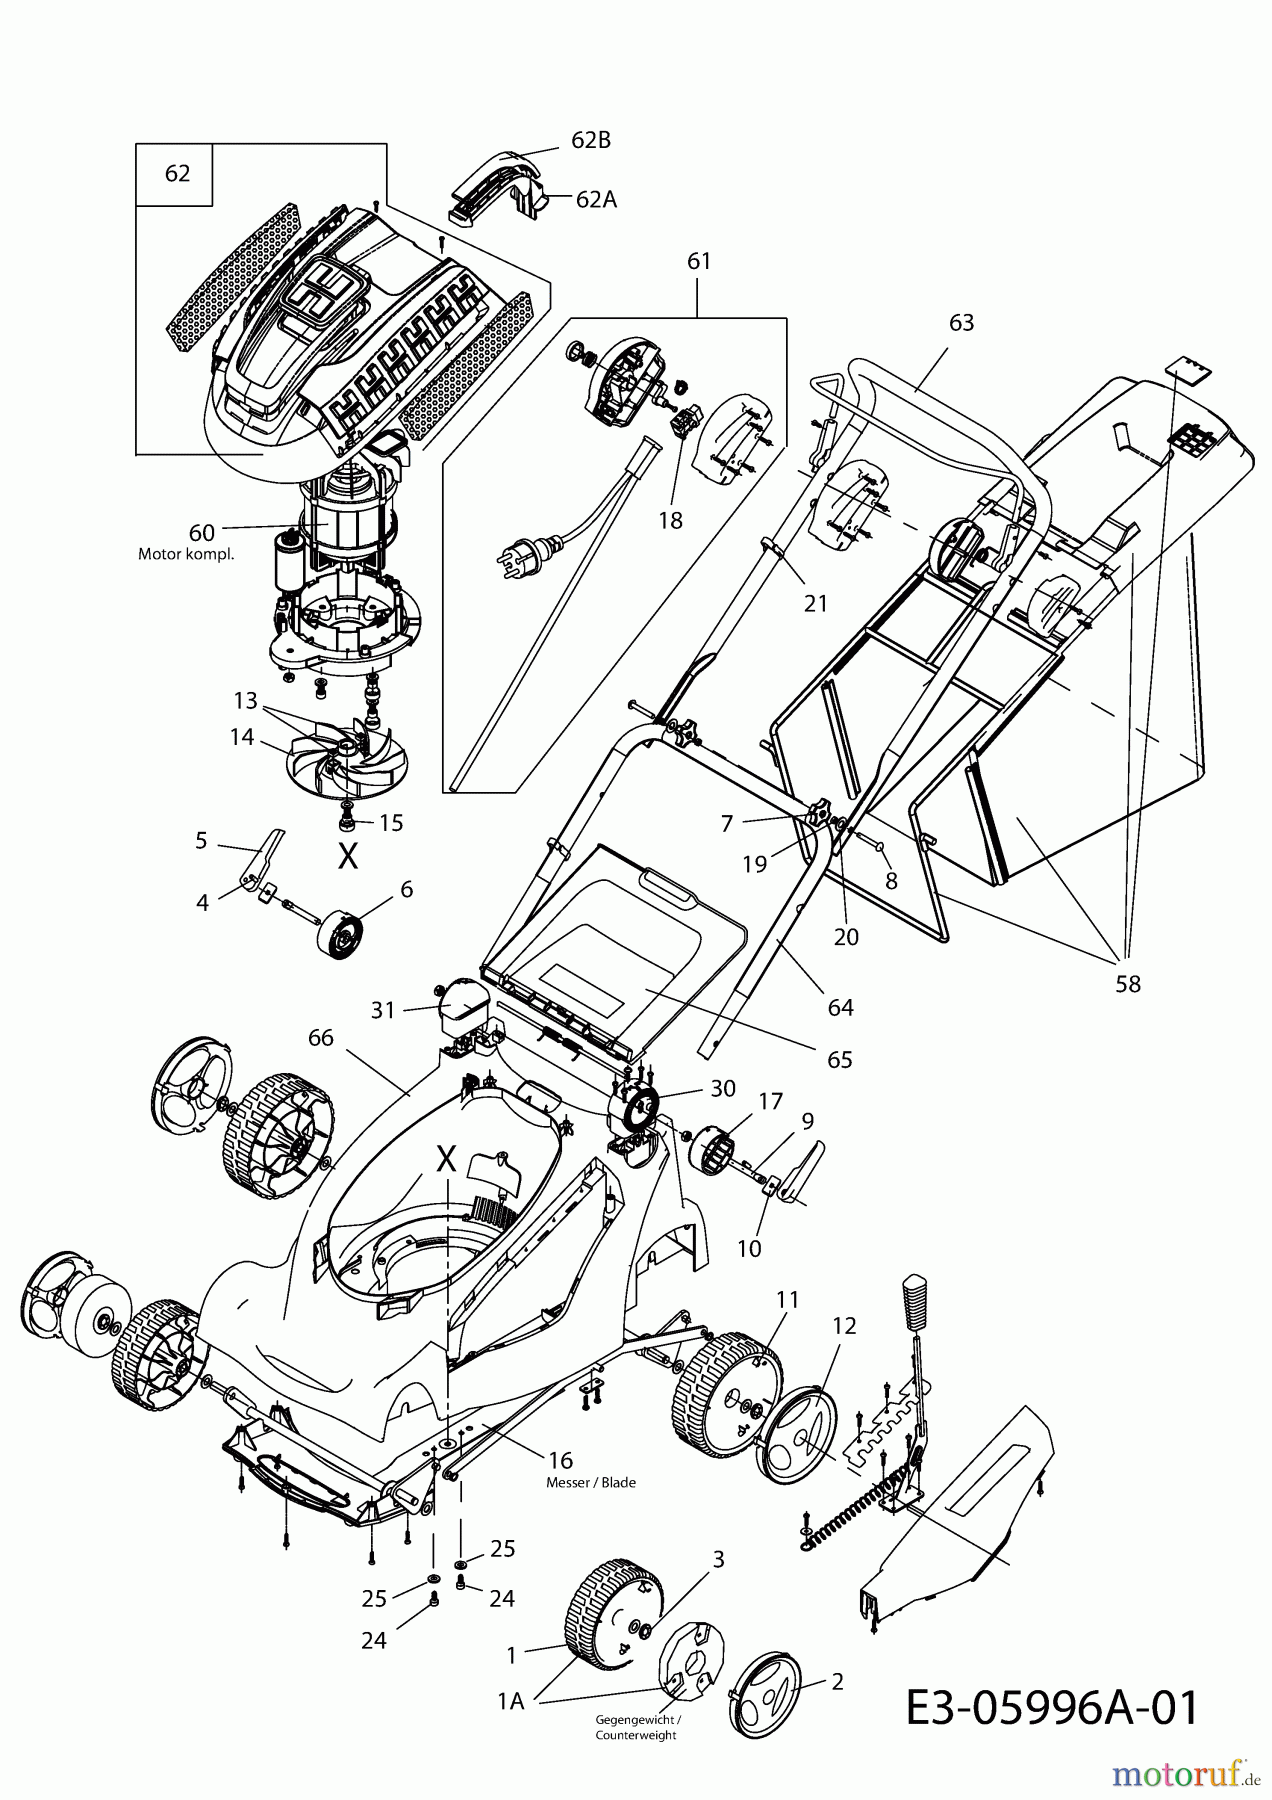  Plantiflor Electric mower 1842 ER 18ACE4L2601  (2014) Basic machine